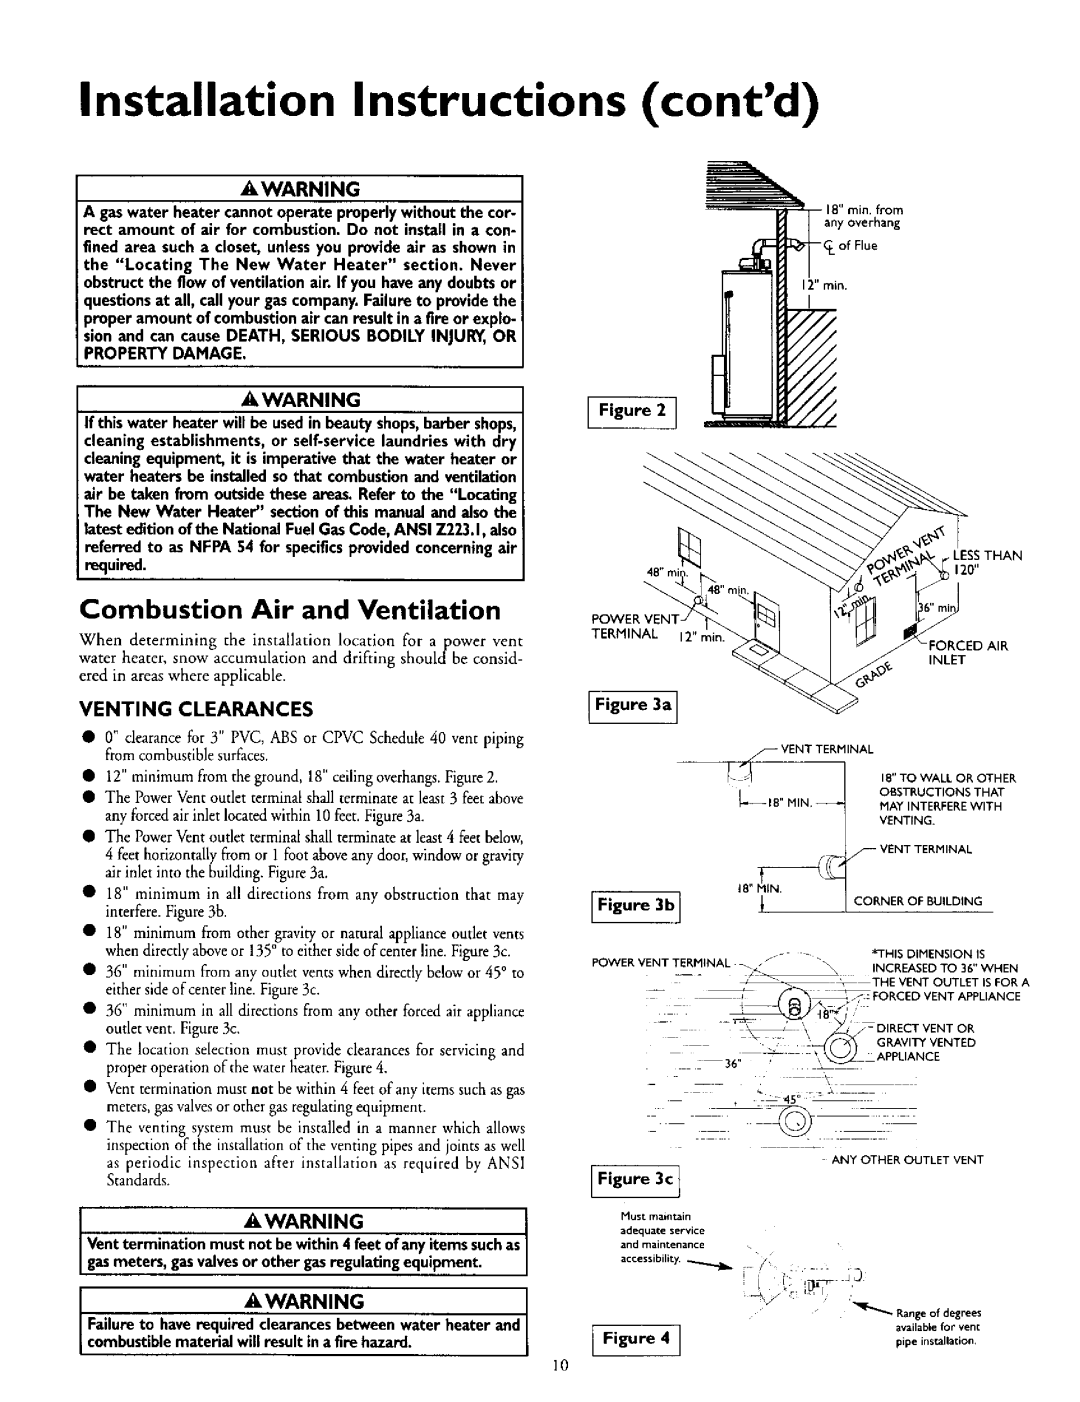 Kenmore 153.335862 Installation Instructions contd, cI, Combustion Air and Ventilation, iIWARNING, F,gu3b, Iiwarning 